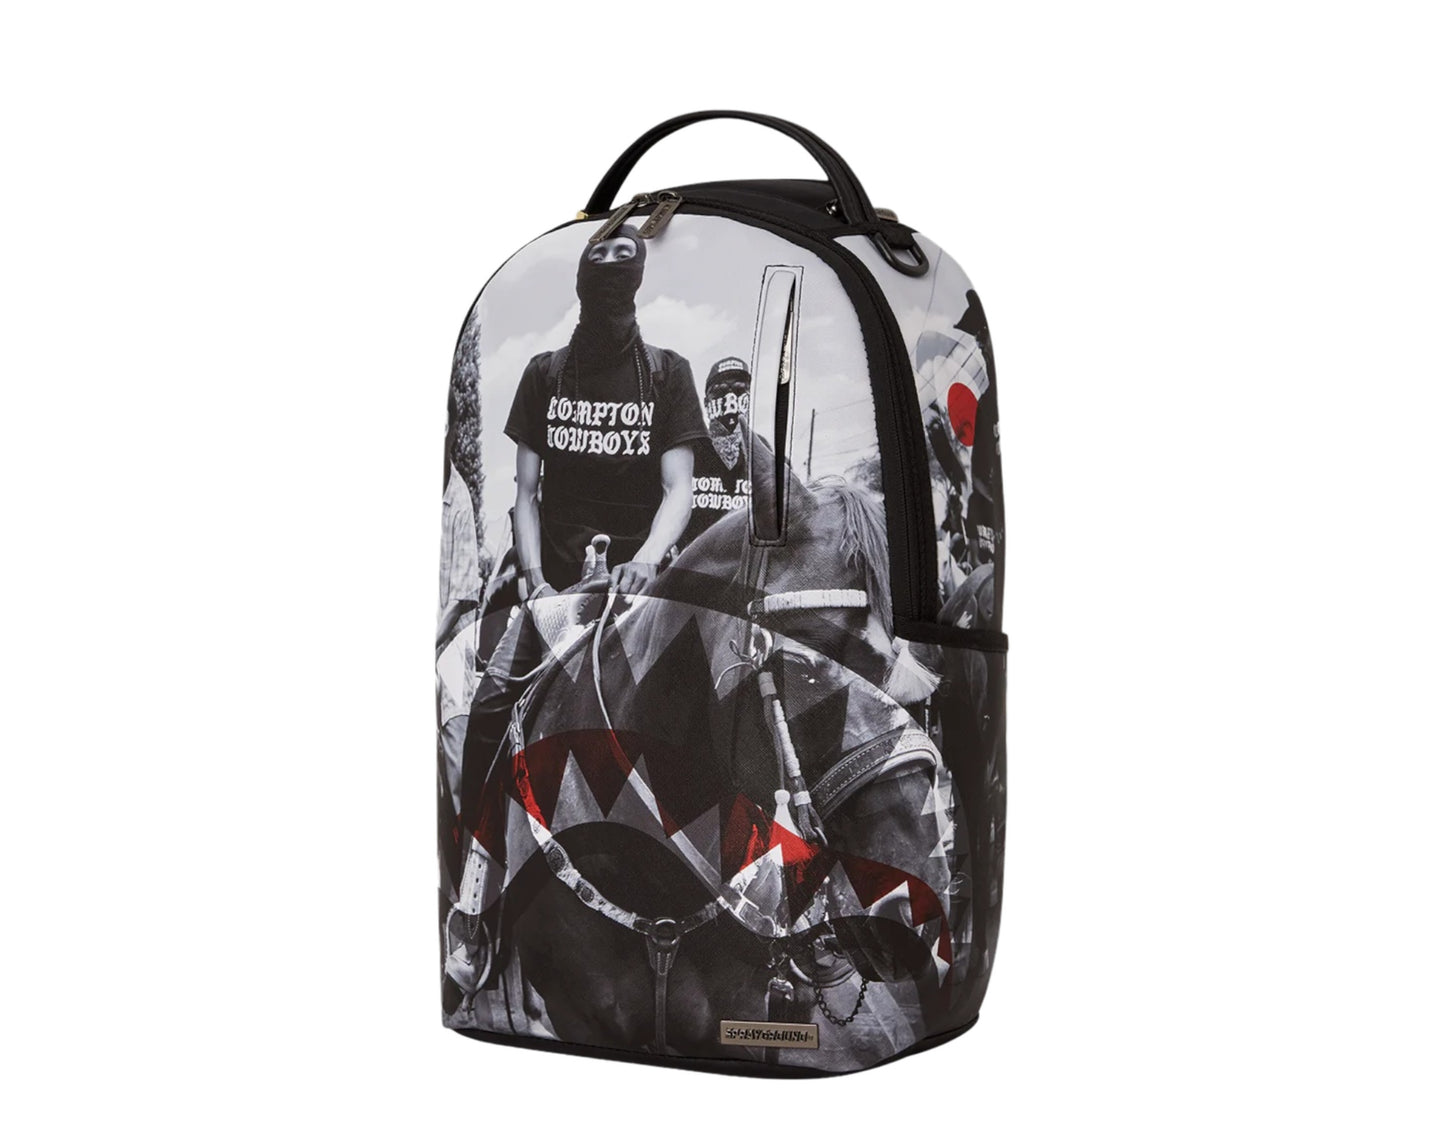 Sprayground Compton Cowboys Riding Alone Backpack